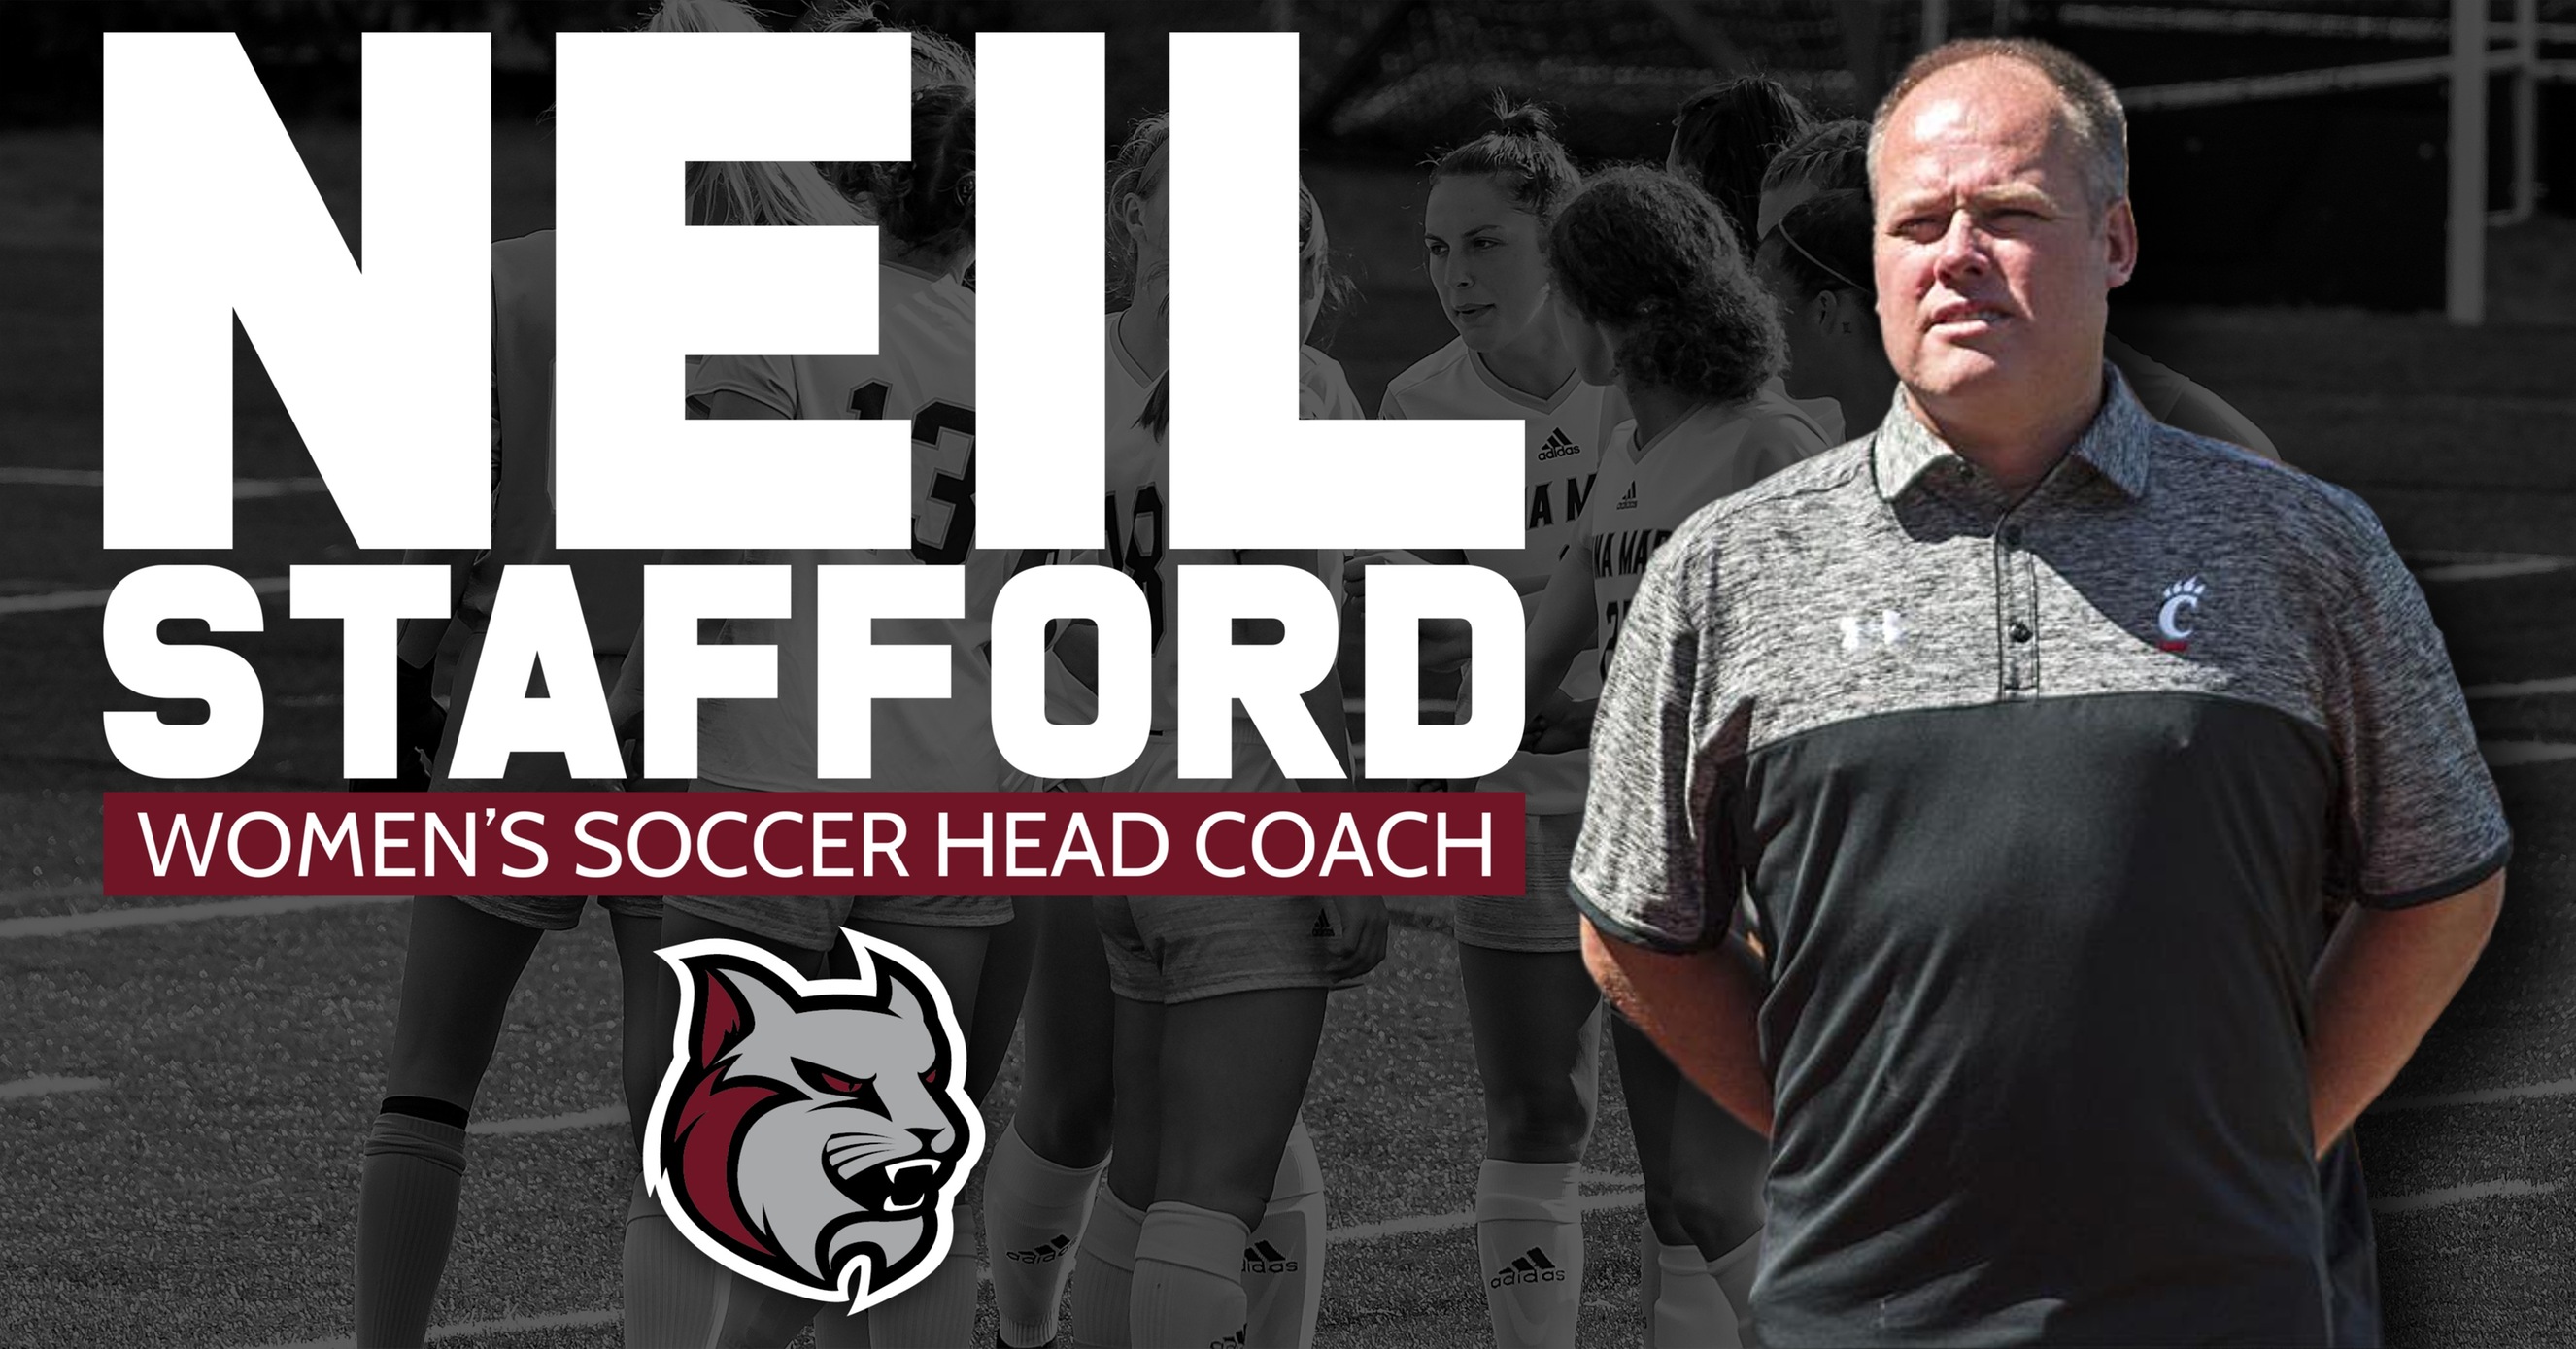 Stafford Named Women's Soccer Head Coach